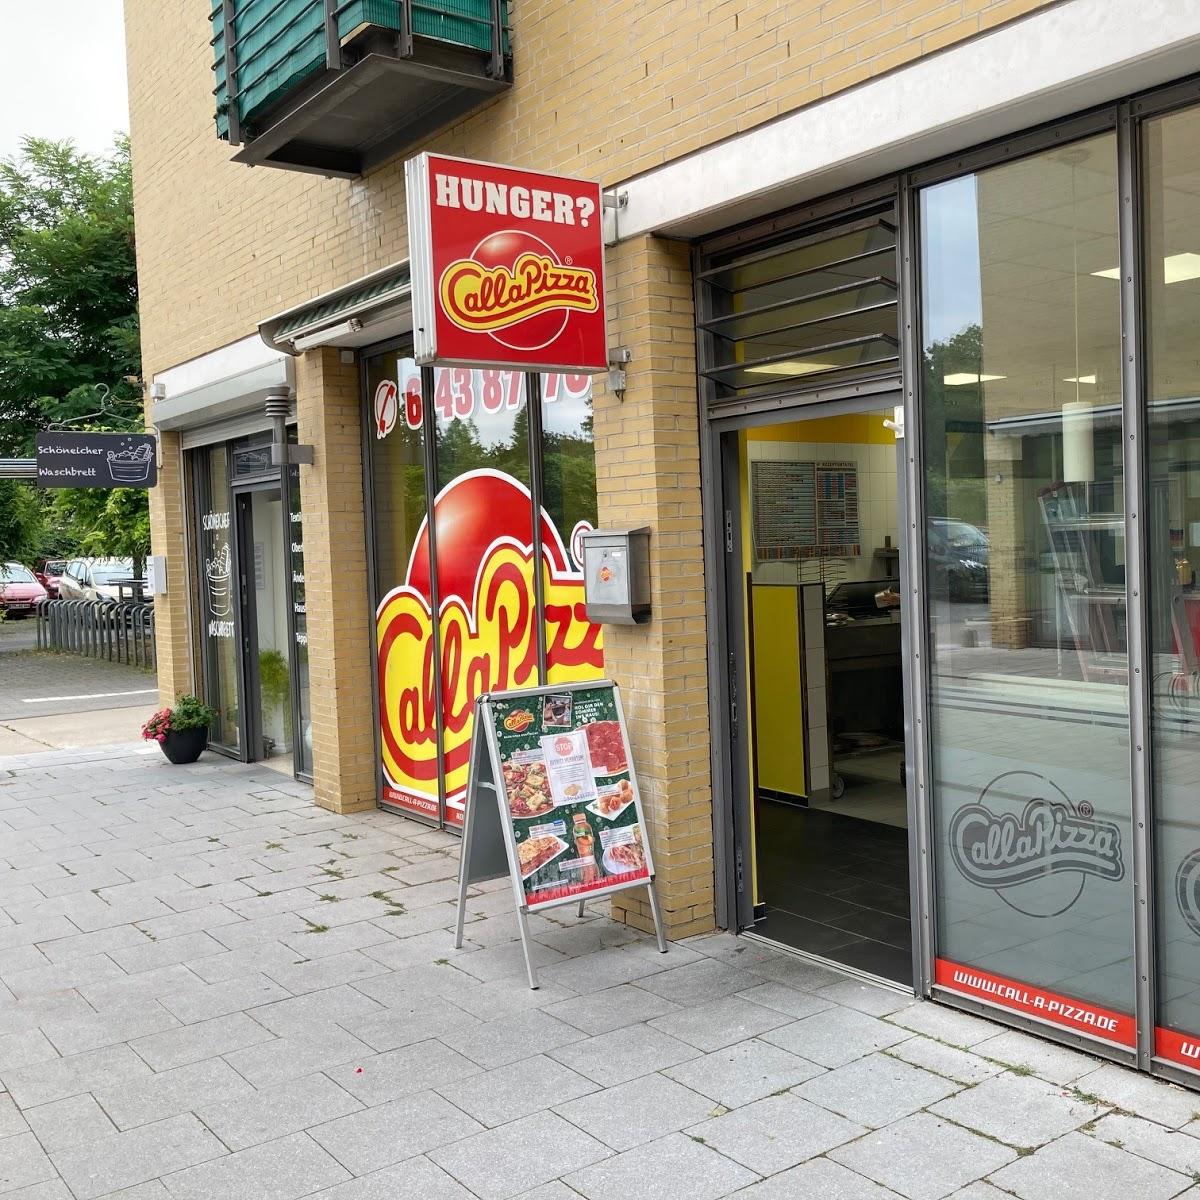 Restaurant "Call a Pizza" in Schöneiche bei Berlin